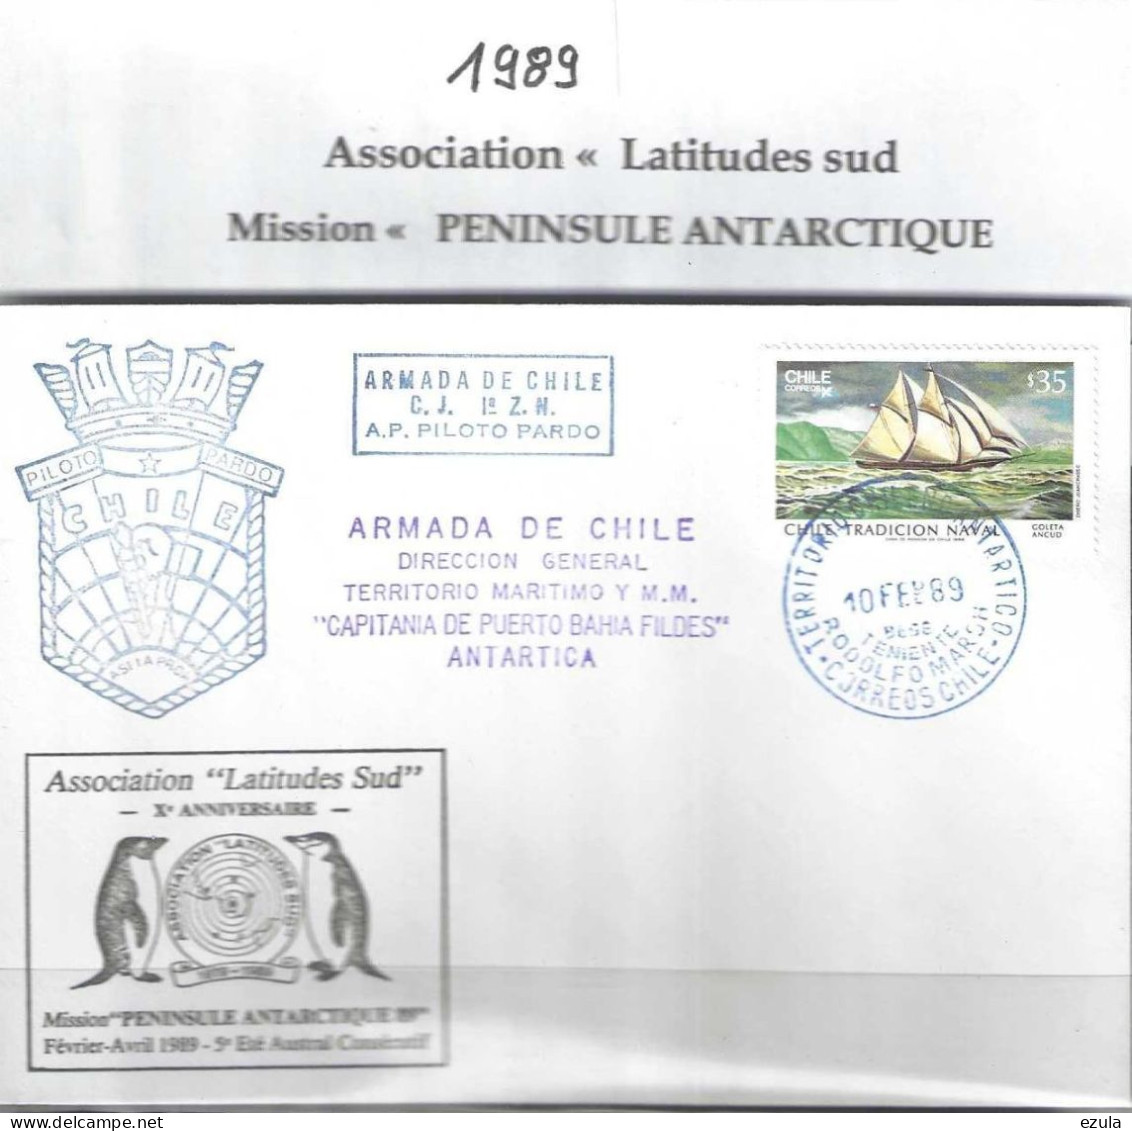 Chilie  -Association Latitude Sud  Mission Péninsule Antarctique 89 - Año Polar Internacional